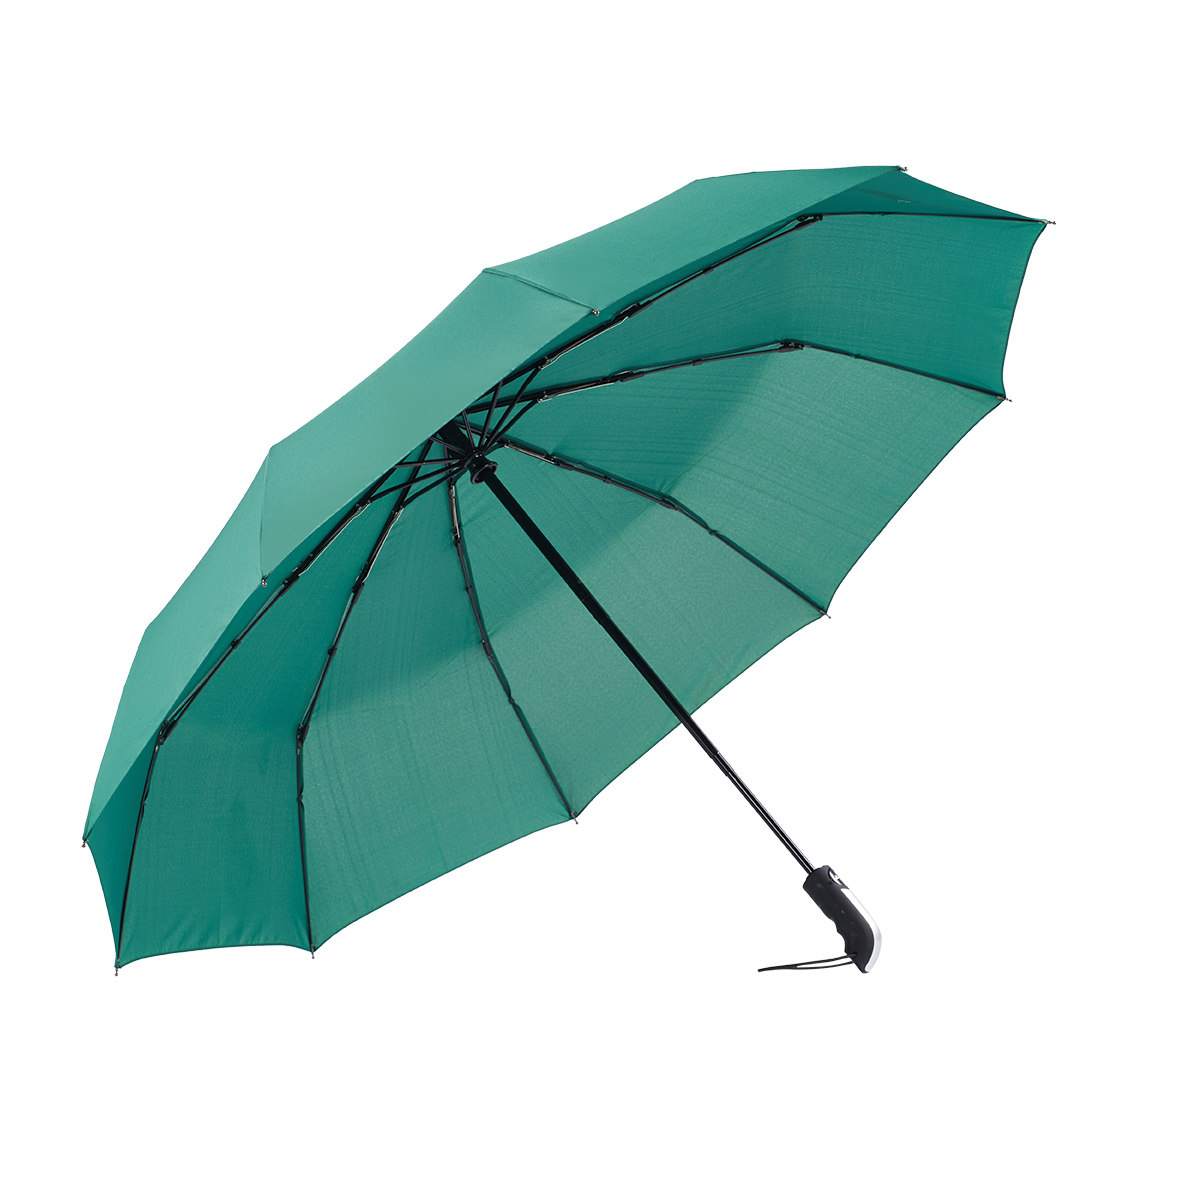 Ovida 3 fold Auto open Auto close Windproof Business Umbrella Large Size for men use